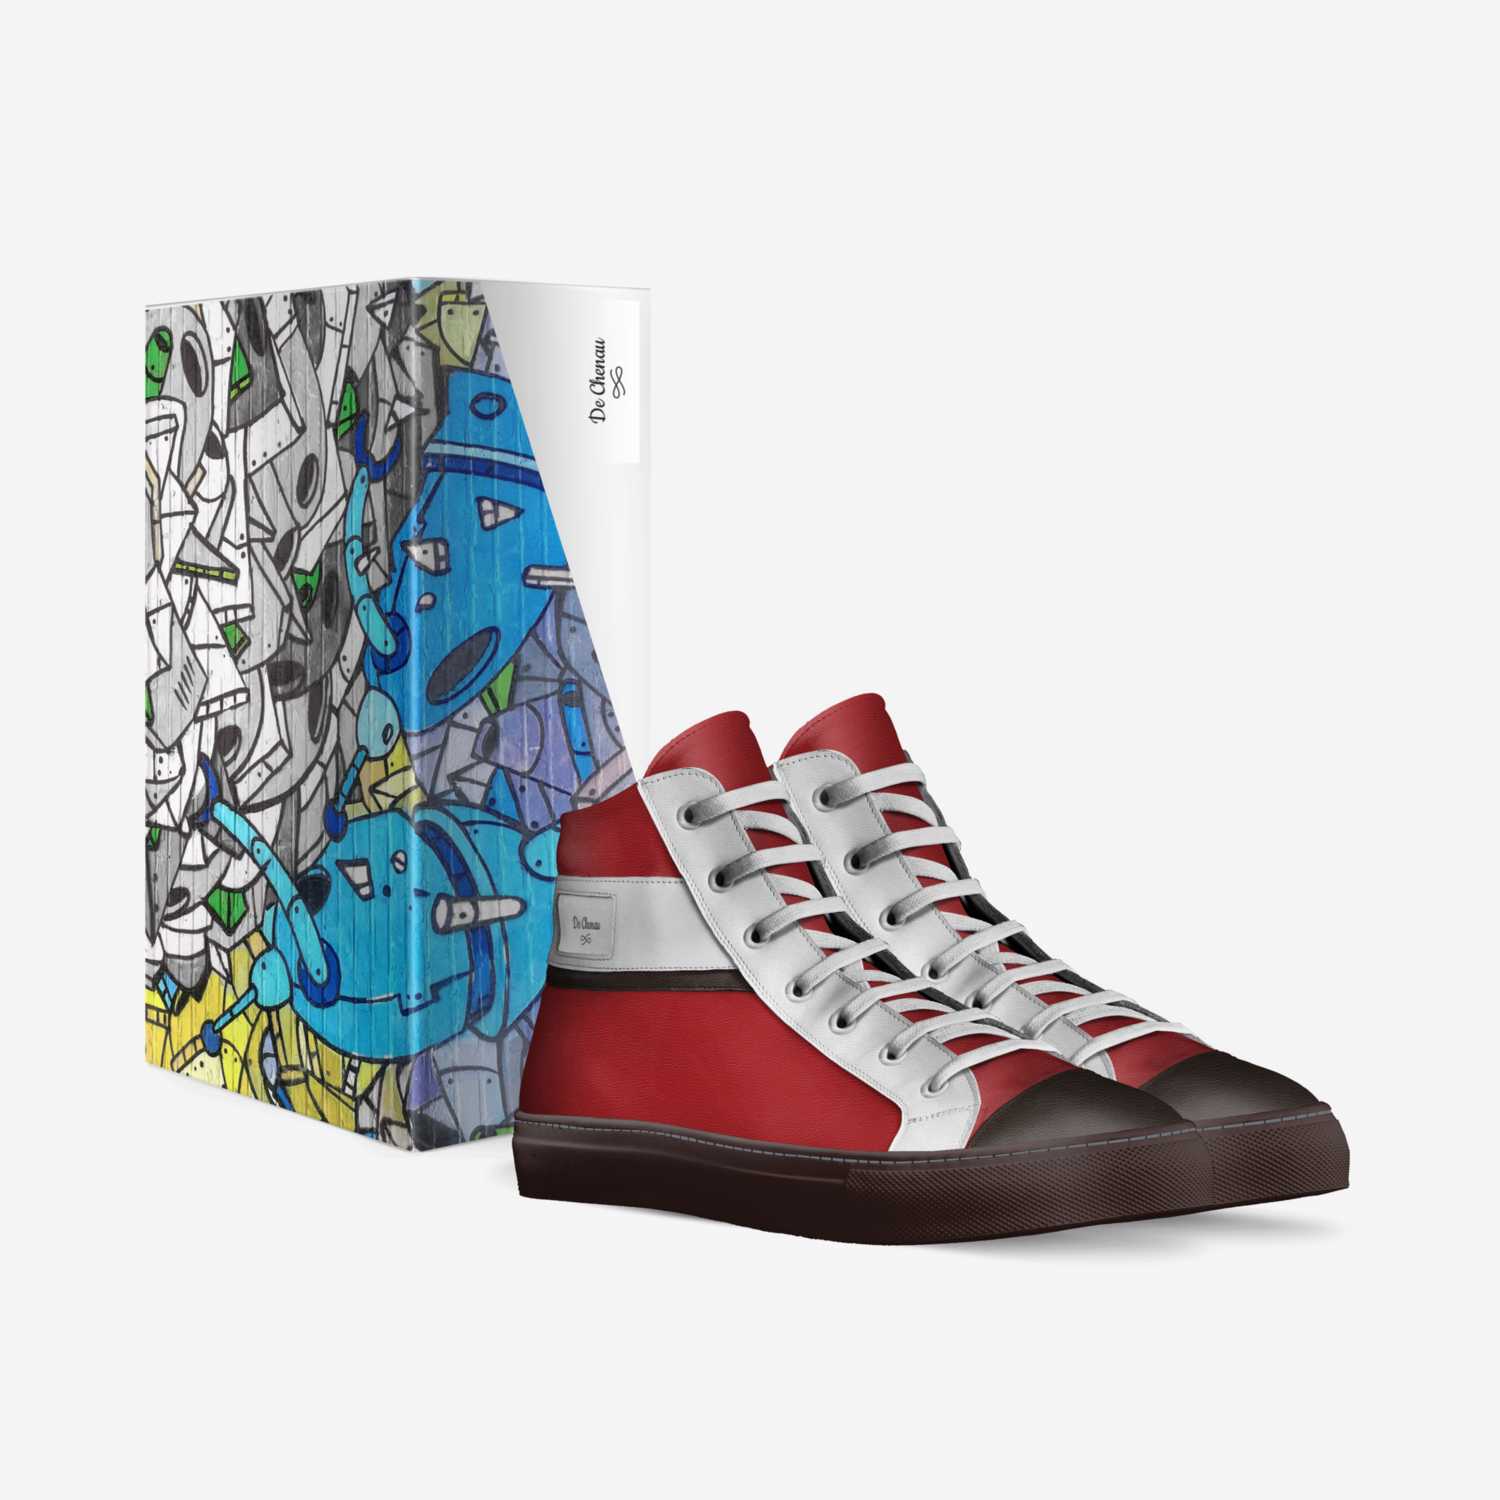 De Chenau custom made in Italy shoes by Hakim Chenault | Box view